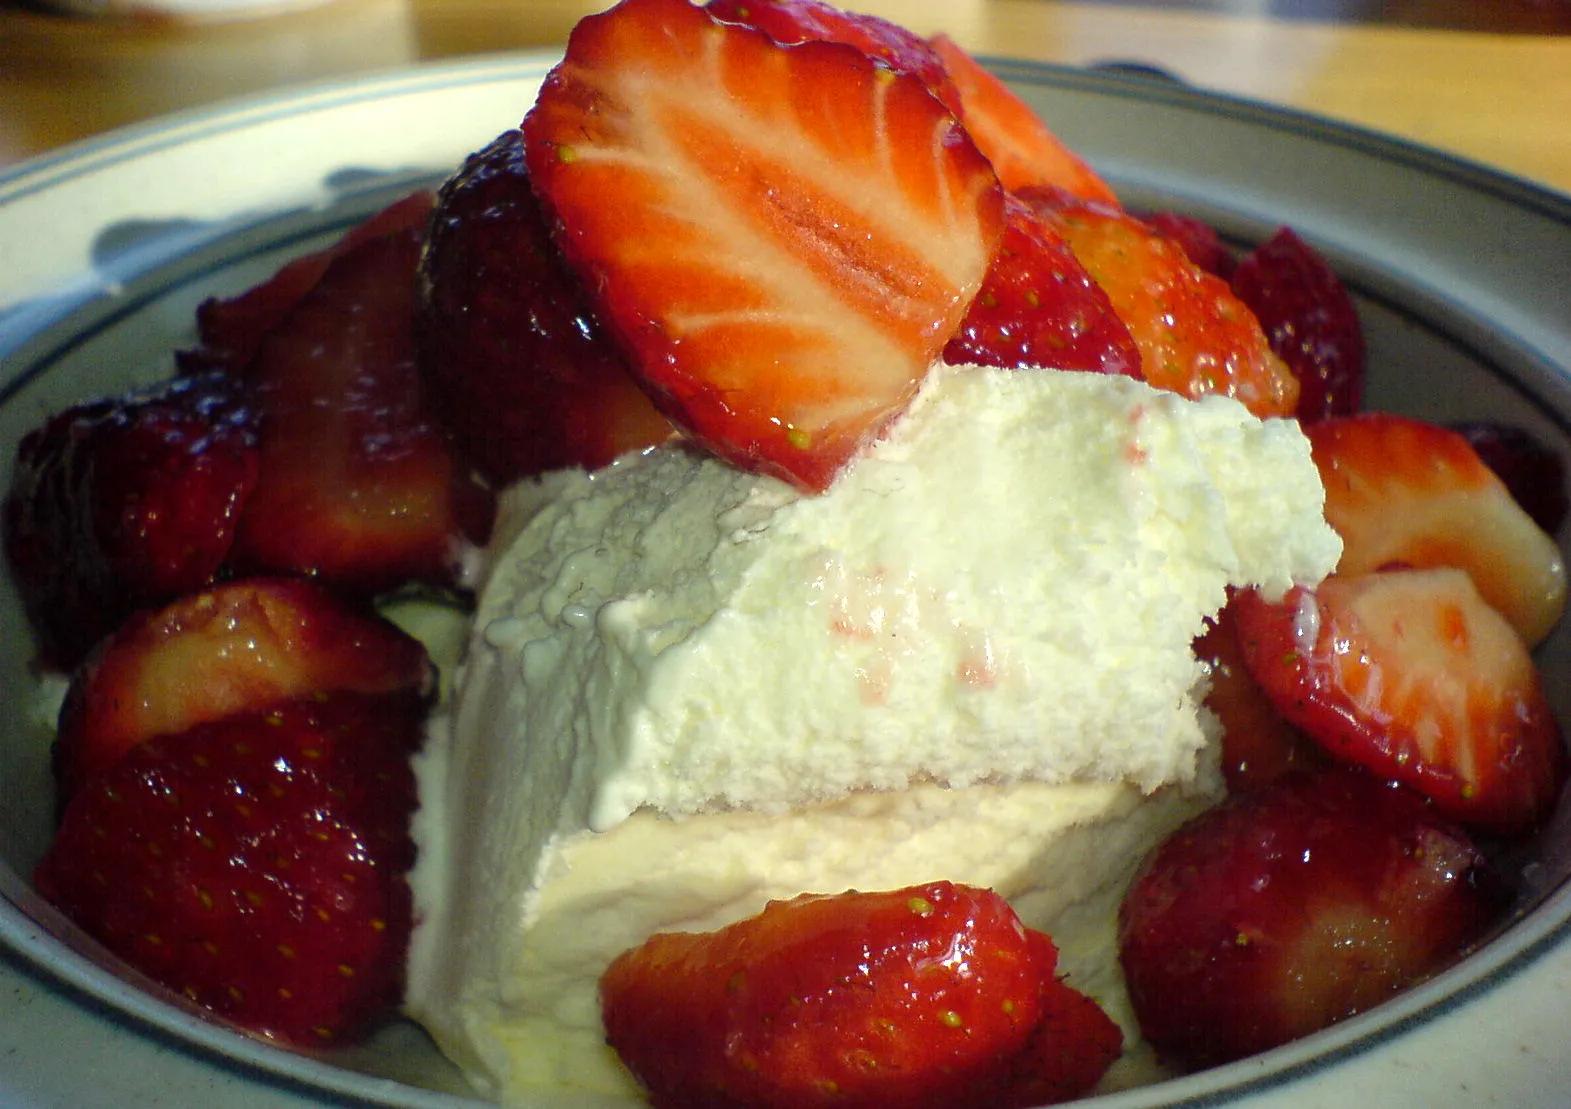 File:Strawberry ice cream dessert.jpg